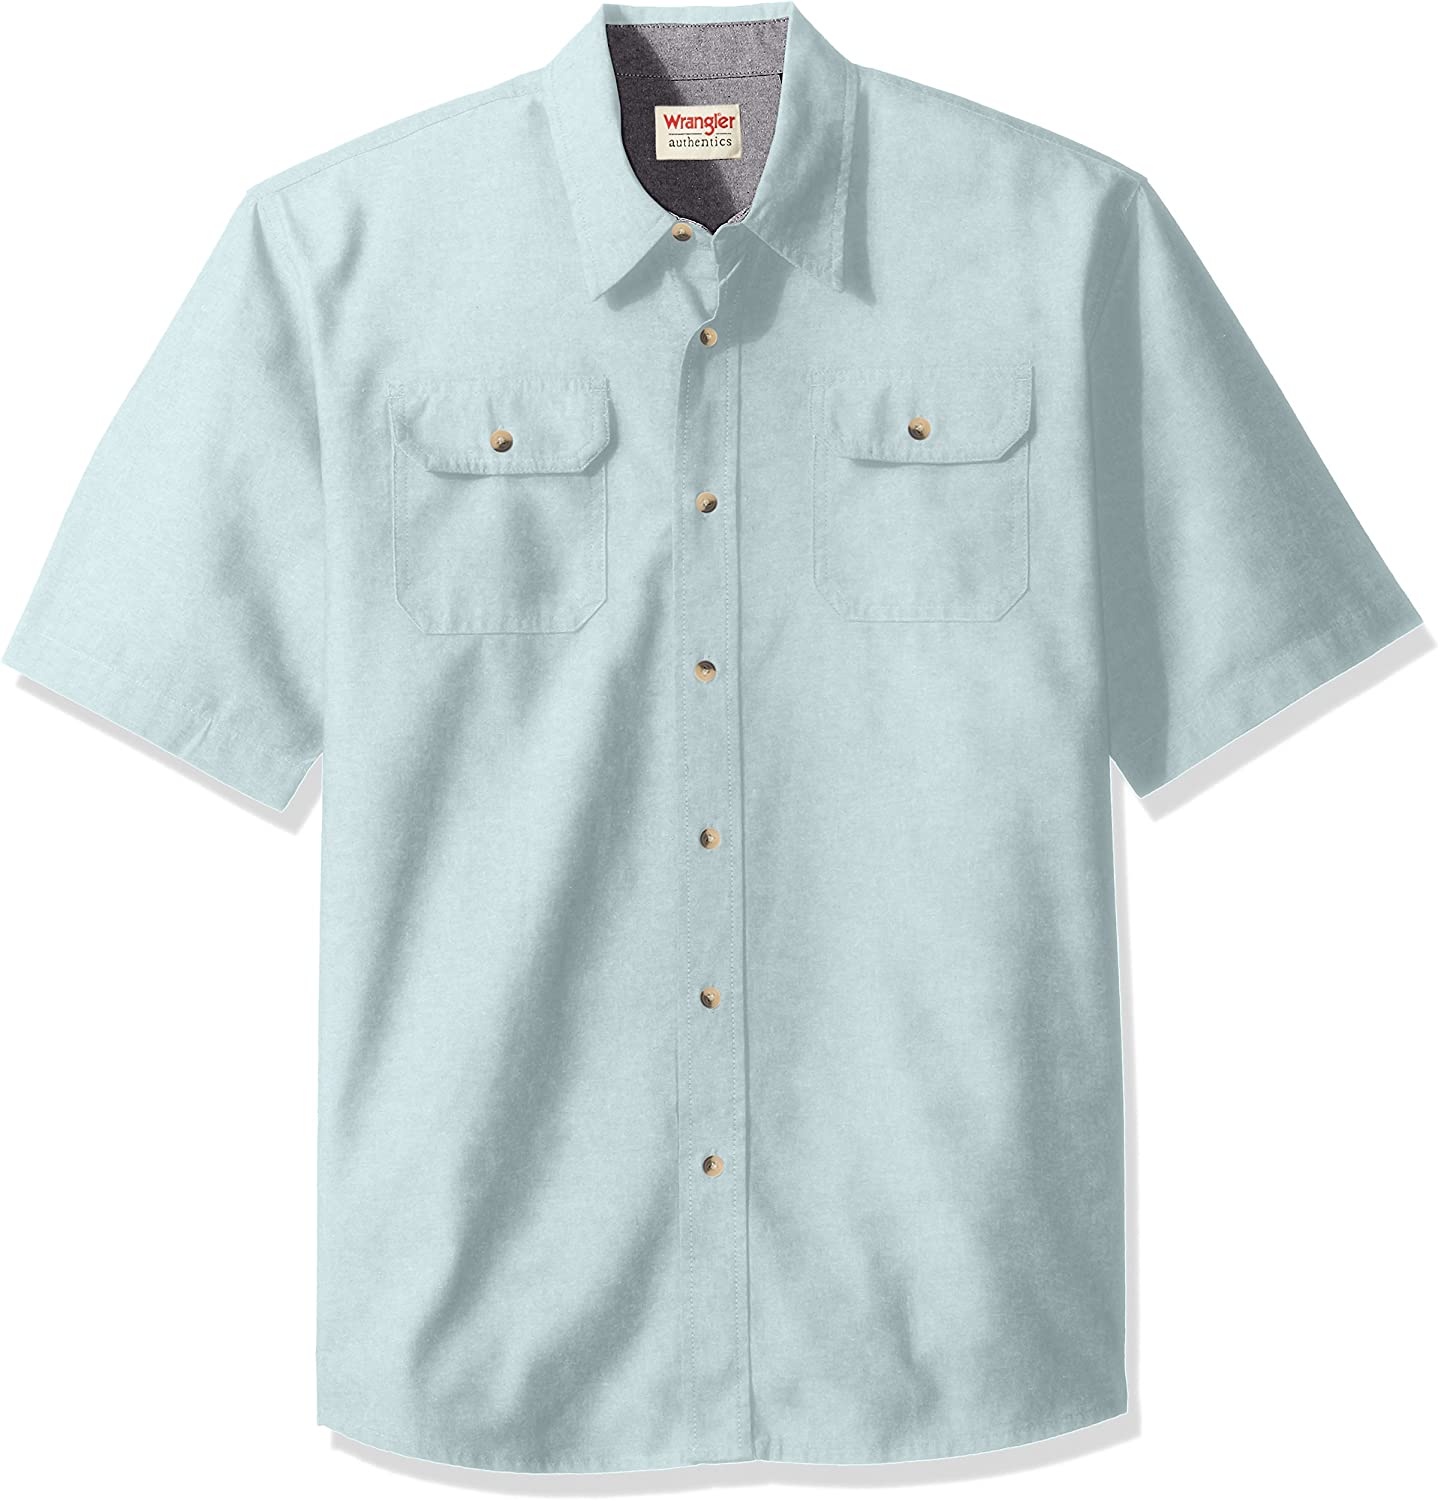 Wrangler Authentics Men's Short Sleeve Classic Woven Shirt